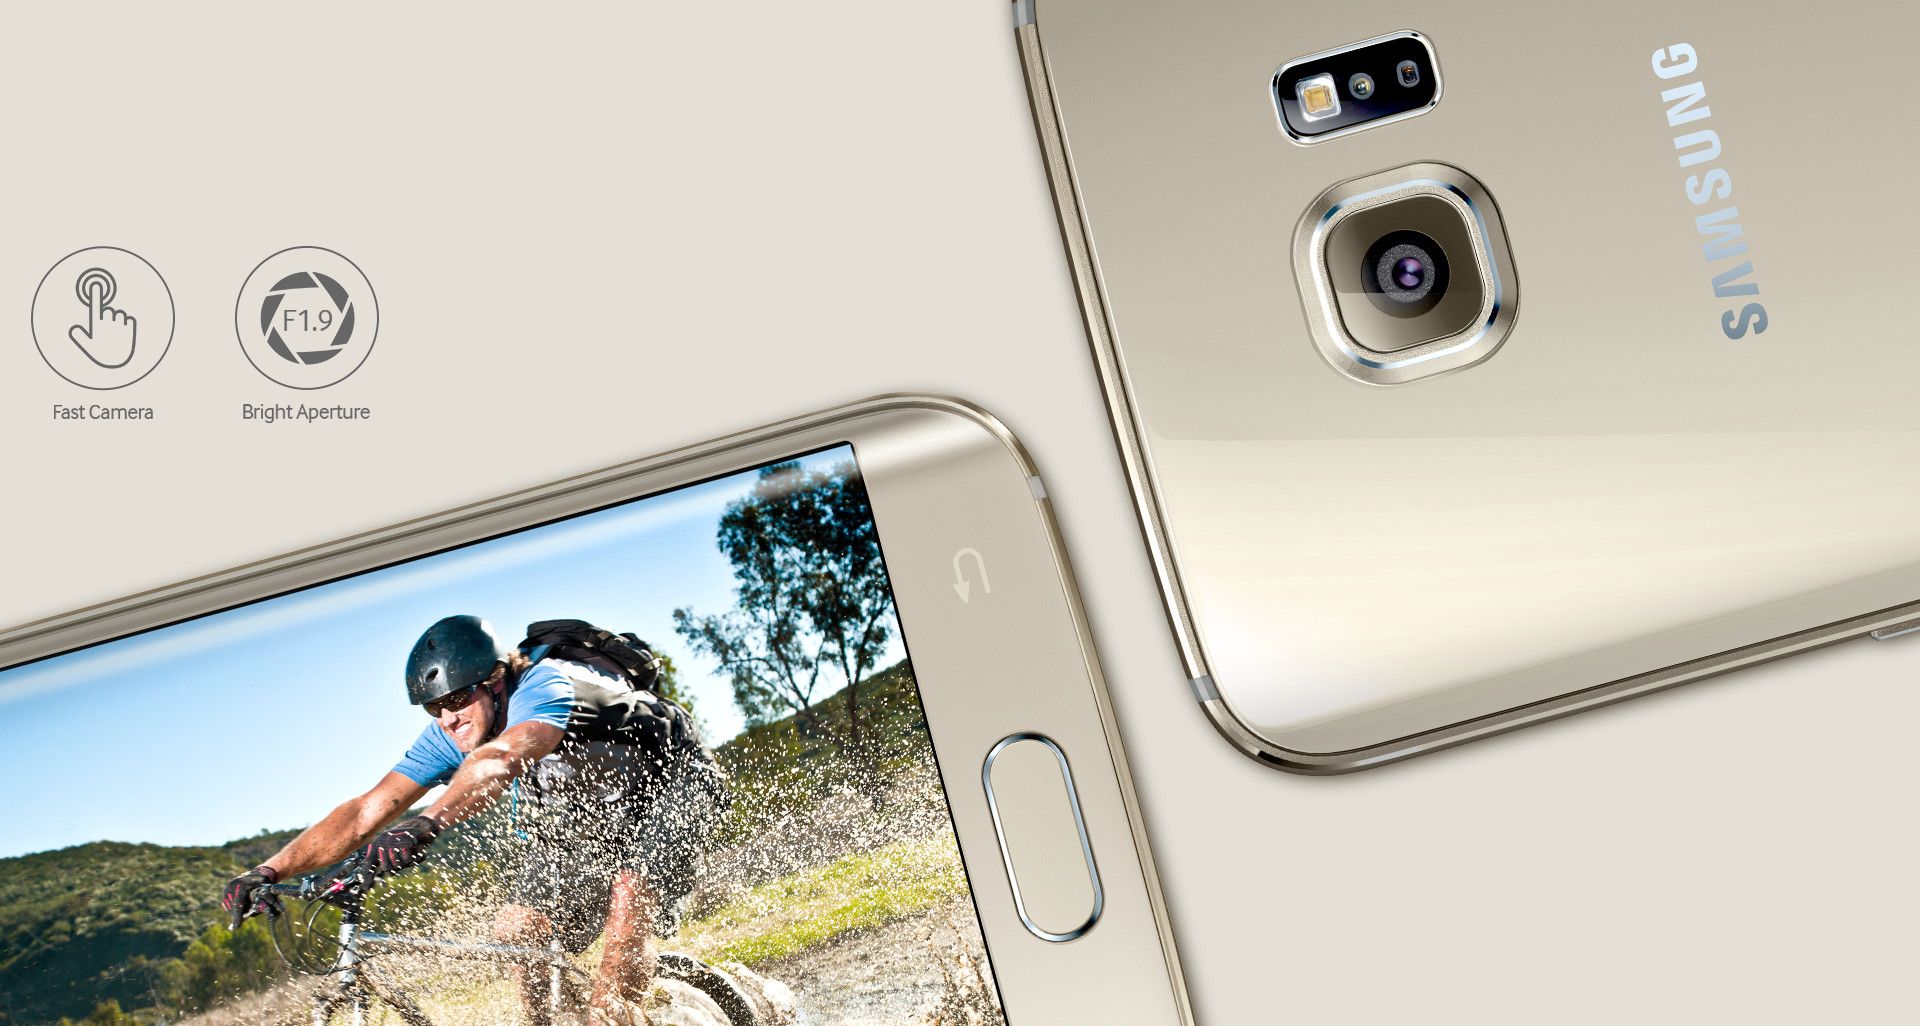 Samsung Galaxy S6 Edge Pictures | Download Free Desktop Wallpaper ...